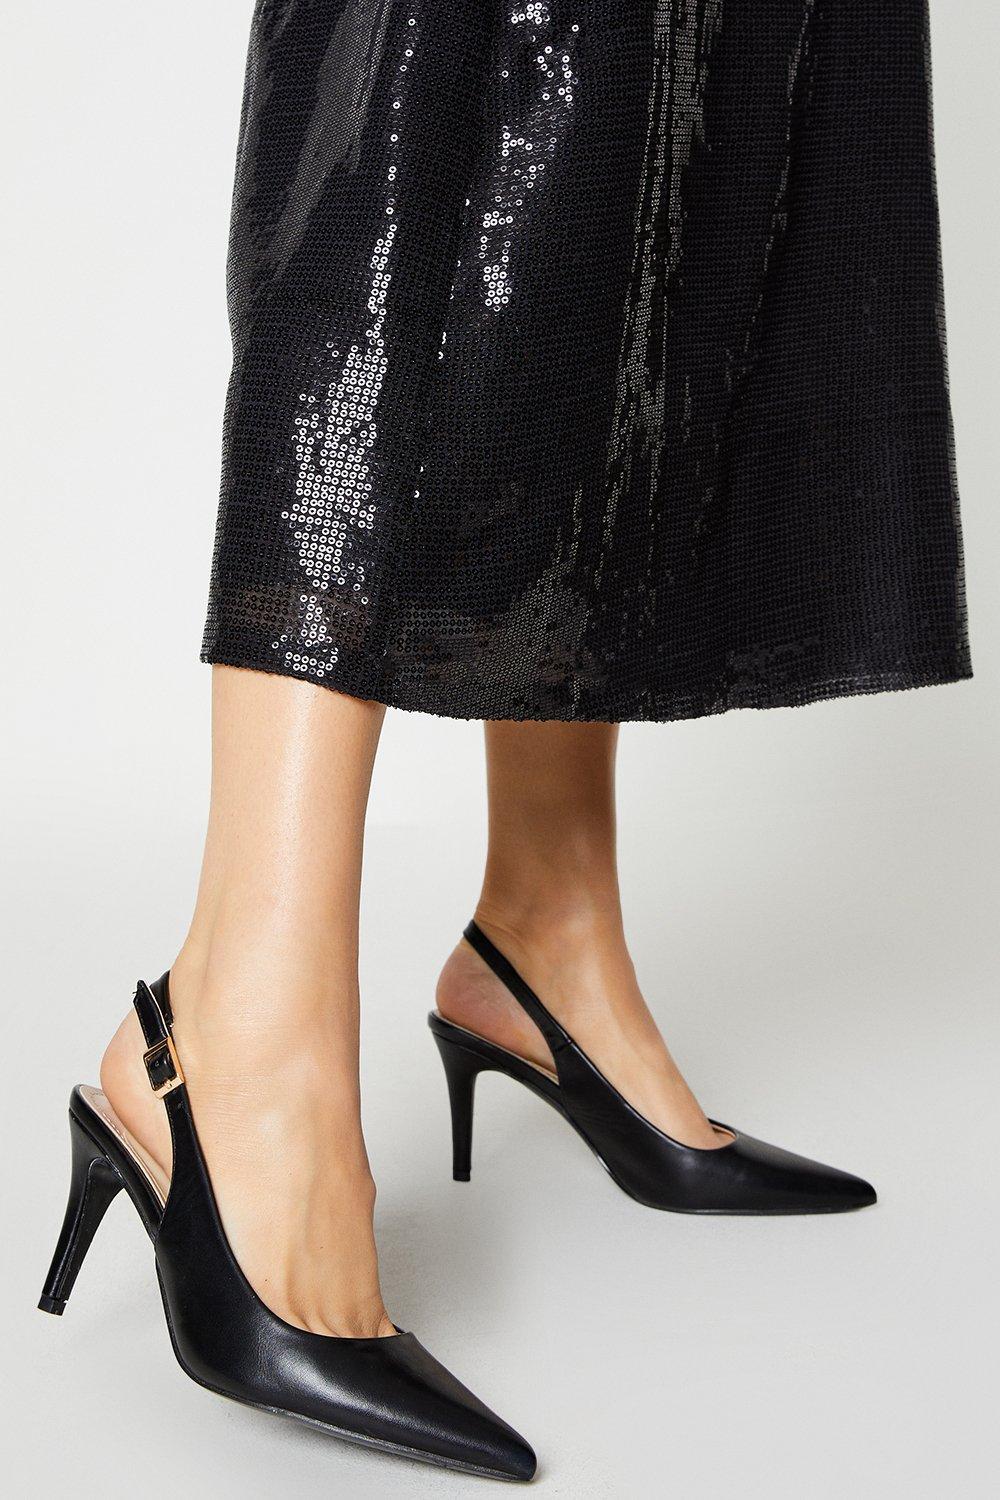 Women’s Eden Comfort Stiletto Heel Sling Back Court Shoes - black - 5